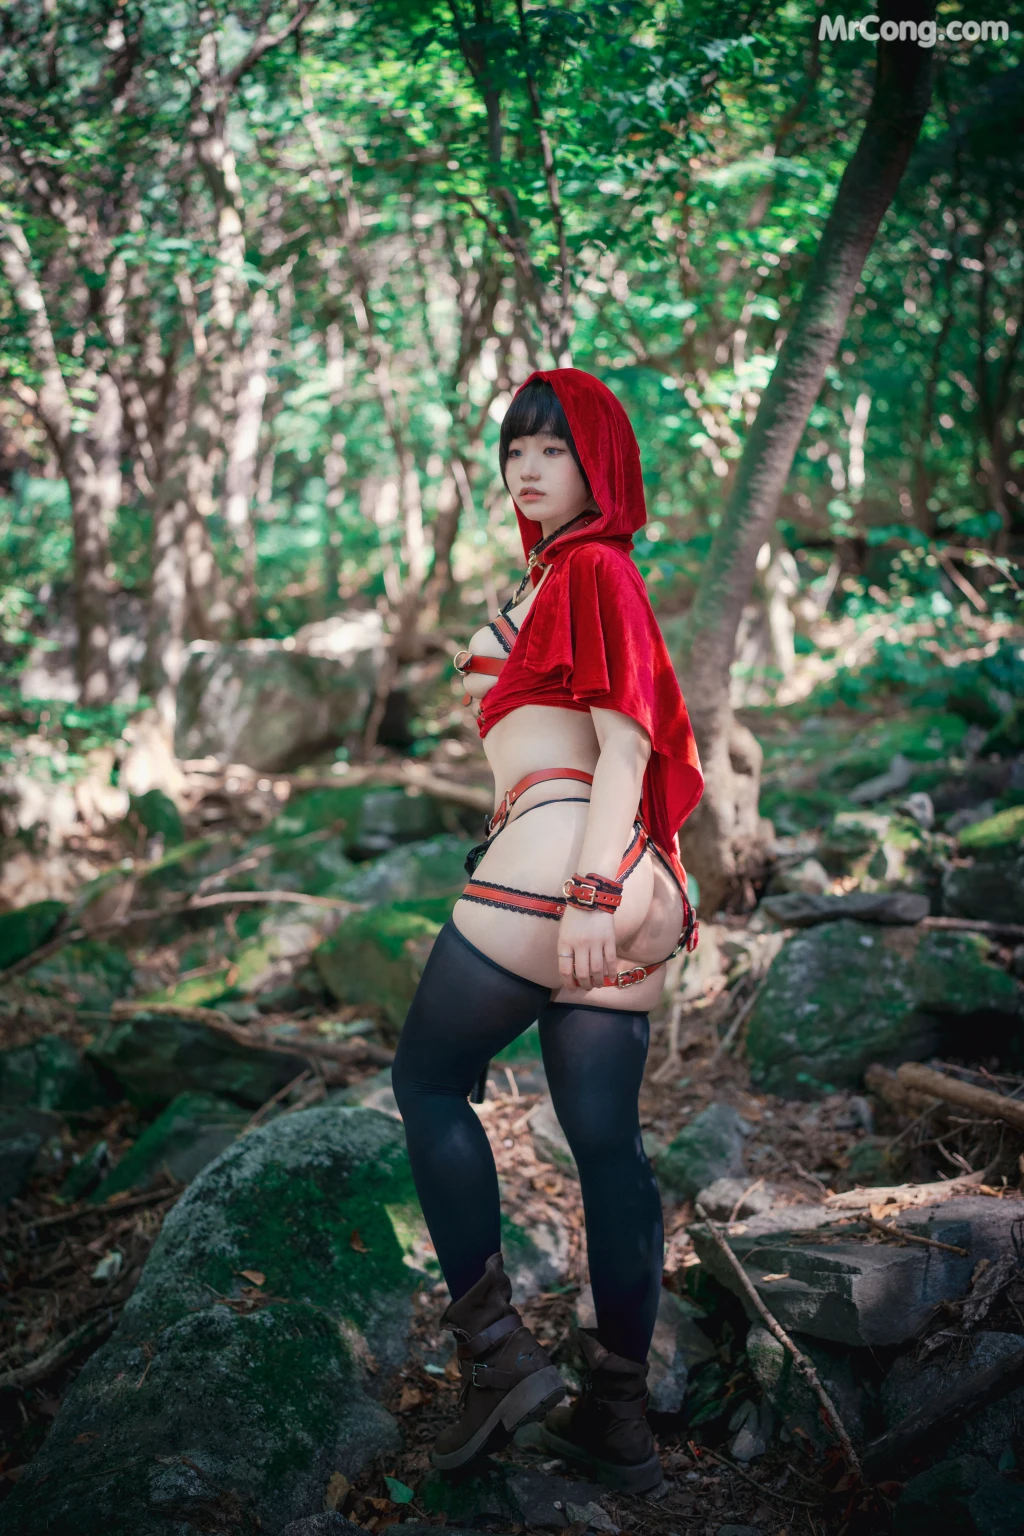 DJAWA Photo - Mimmi (밈미): "Naughty Red Hiring Hood" (125 photos) photo 2-5